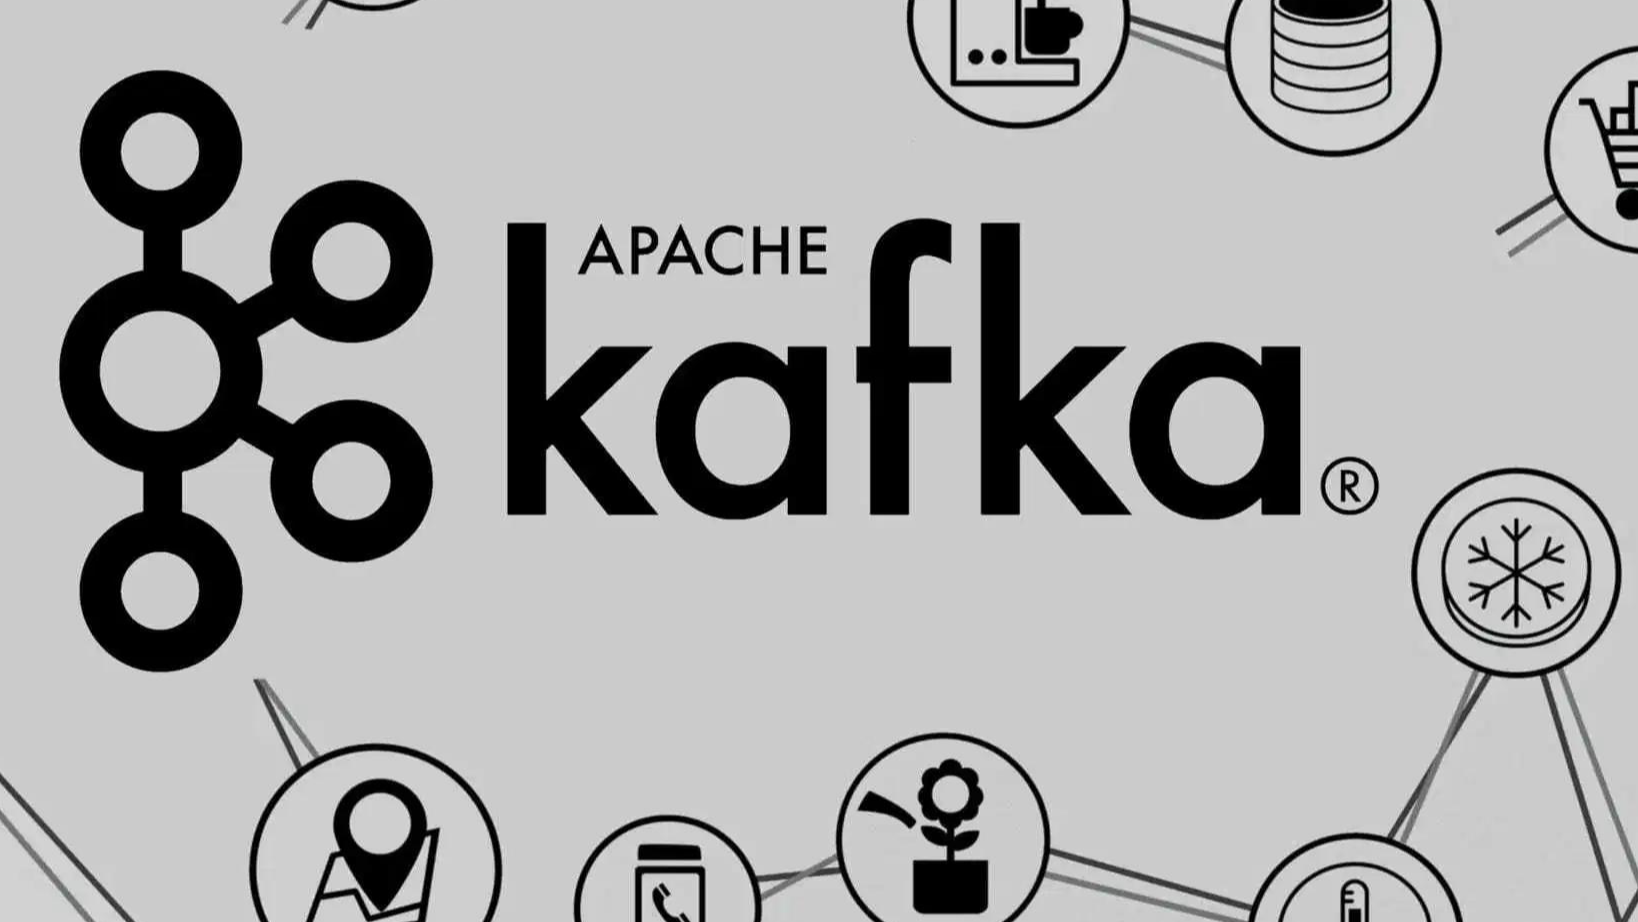 Apache Kafka分布式流处理平台及大厂面试宝典v3.0.0